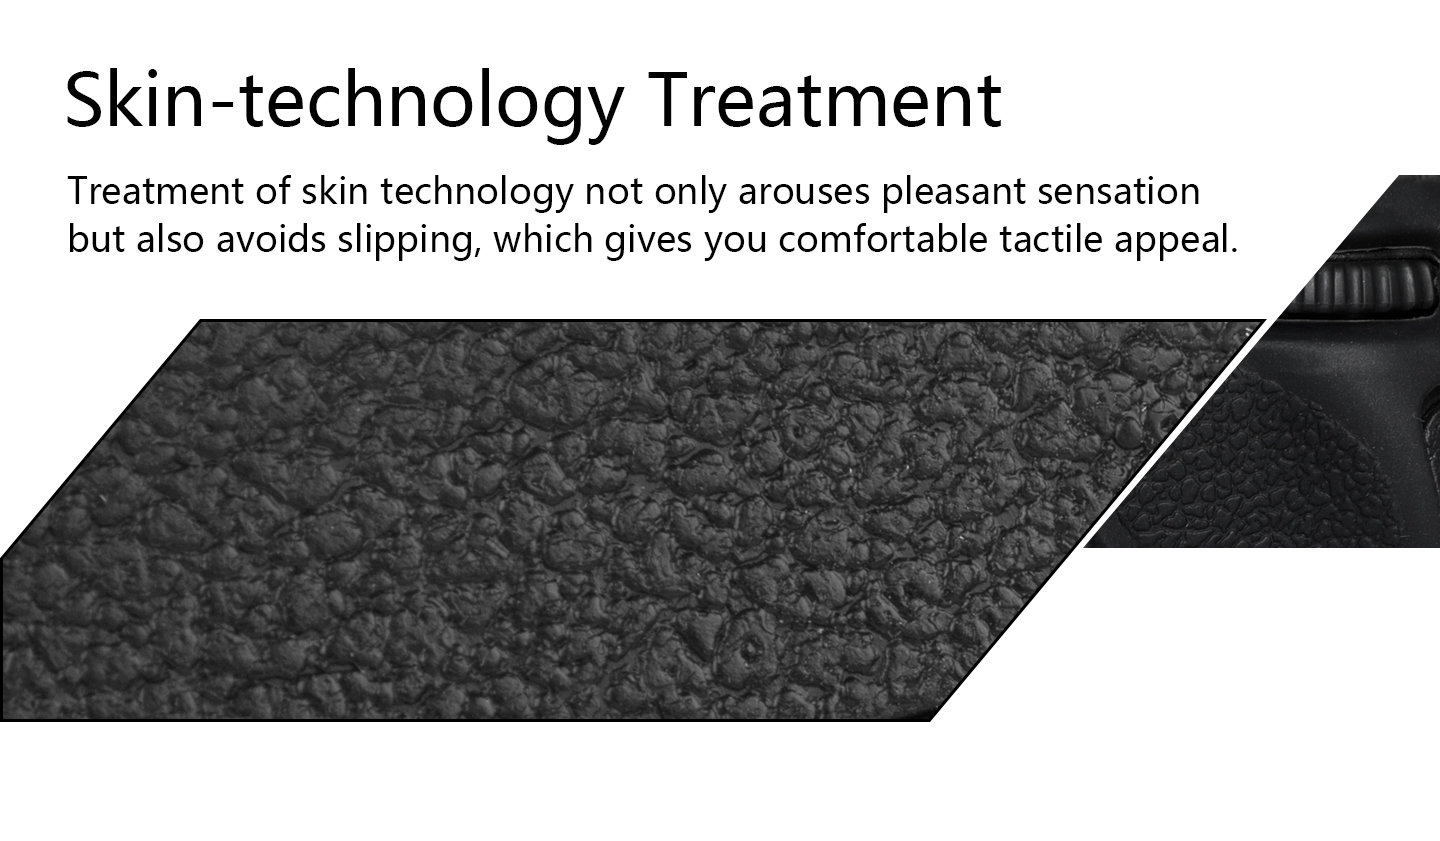 Skin-technology Treatment